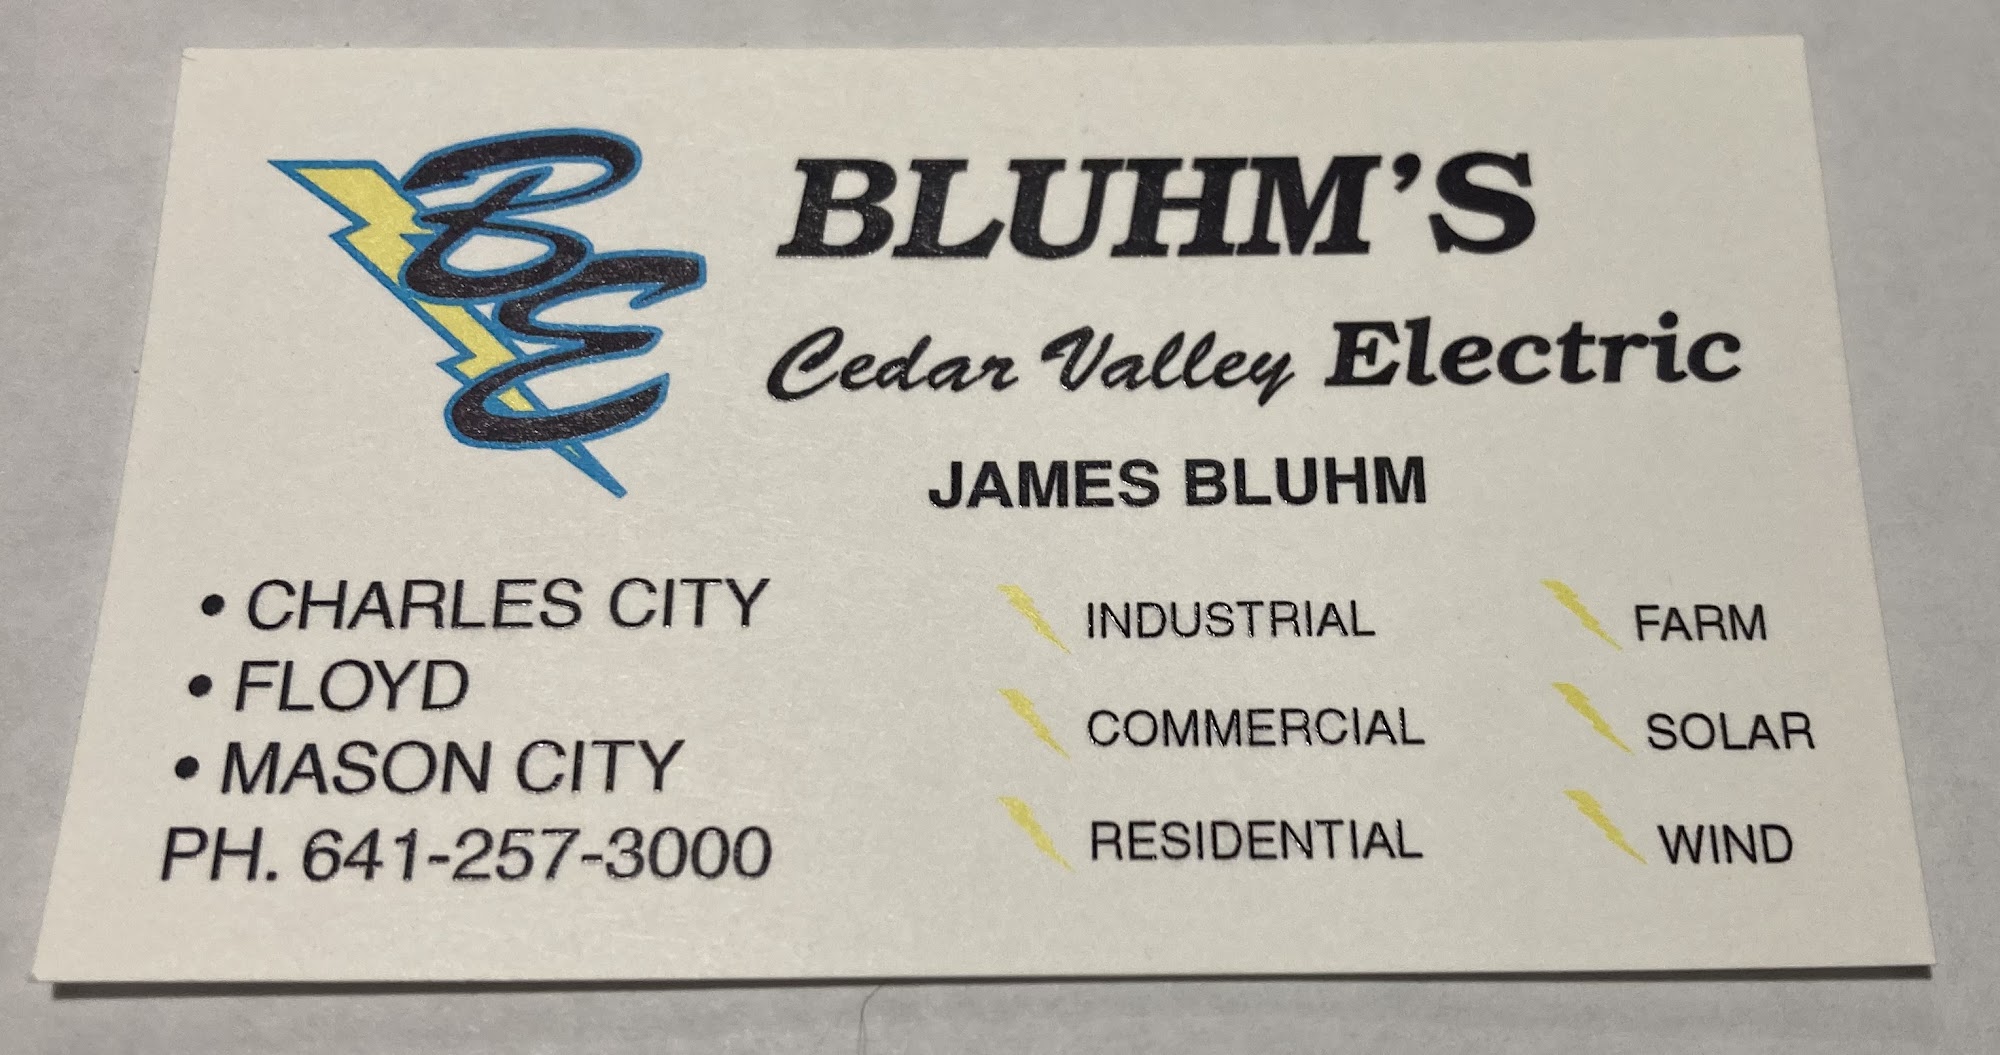 Bluhm's Cedar Valley Electric 404 Madison St, Floyd Iowa 50435